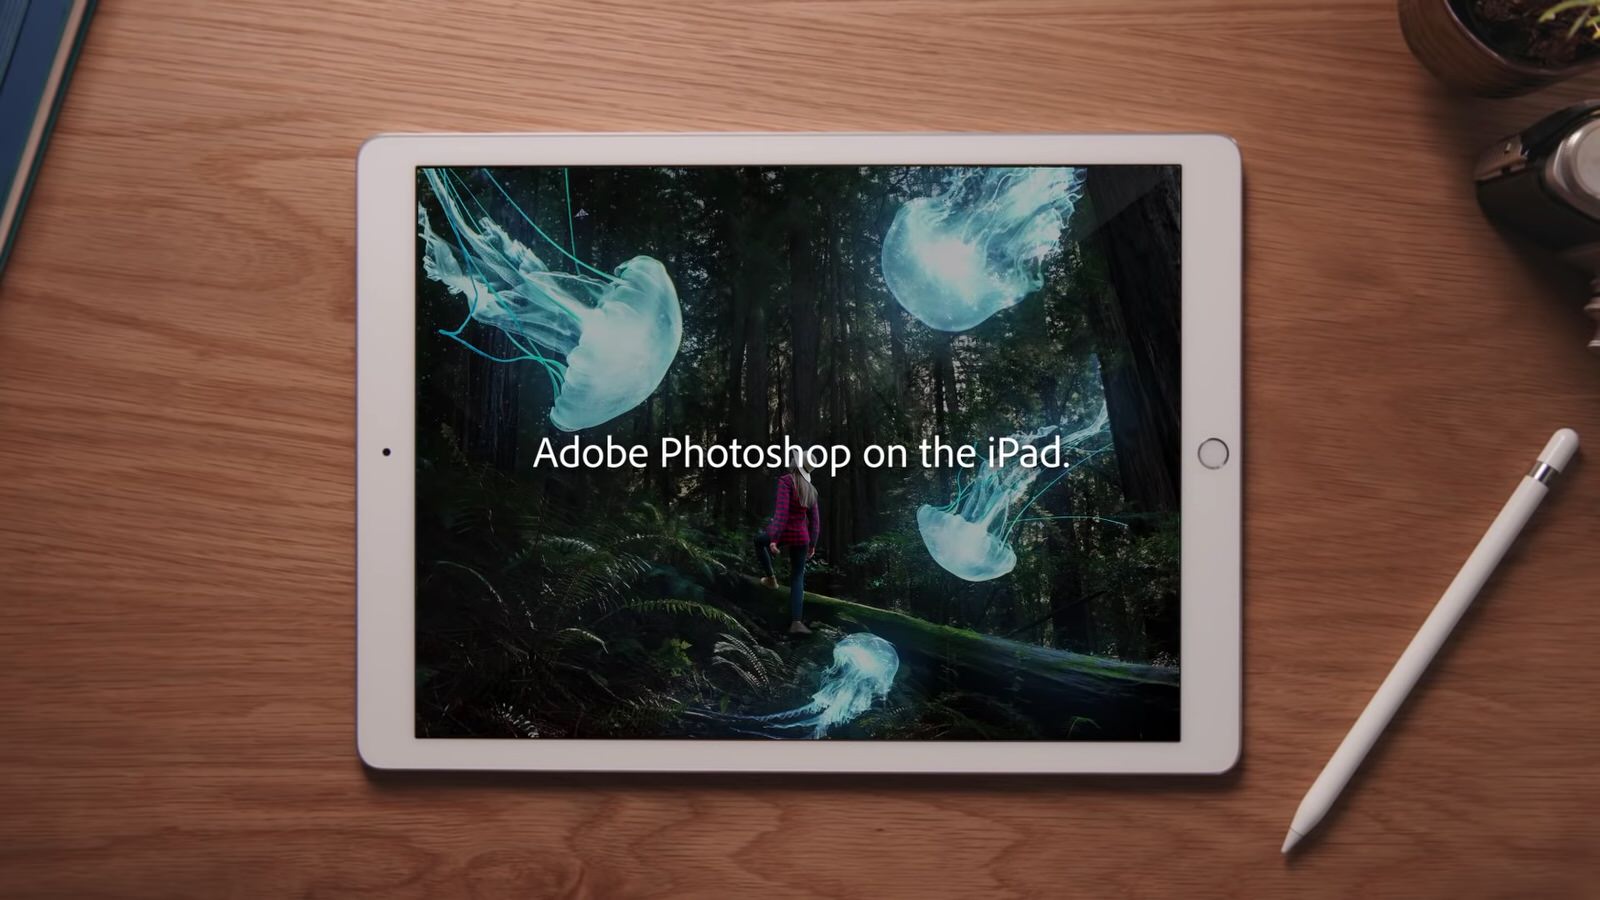 iPadアプリ「Photoshop CC」を発表、すべての機能を利用可能 2019年公開へ